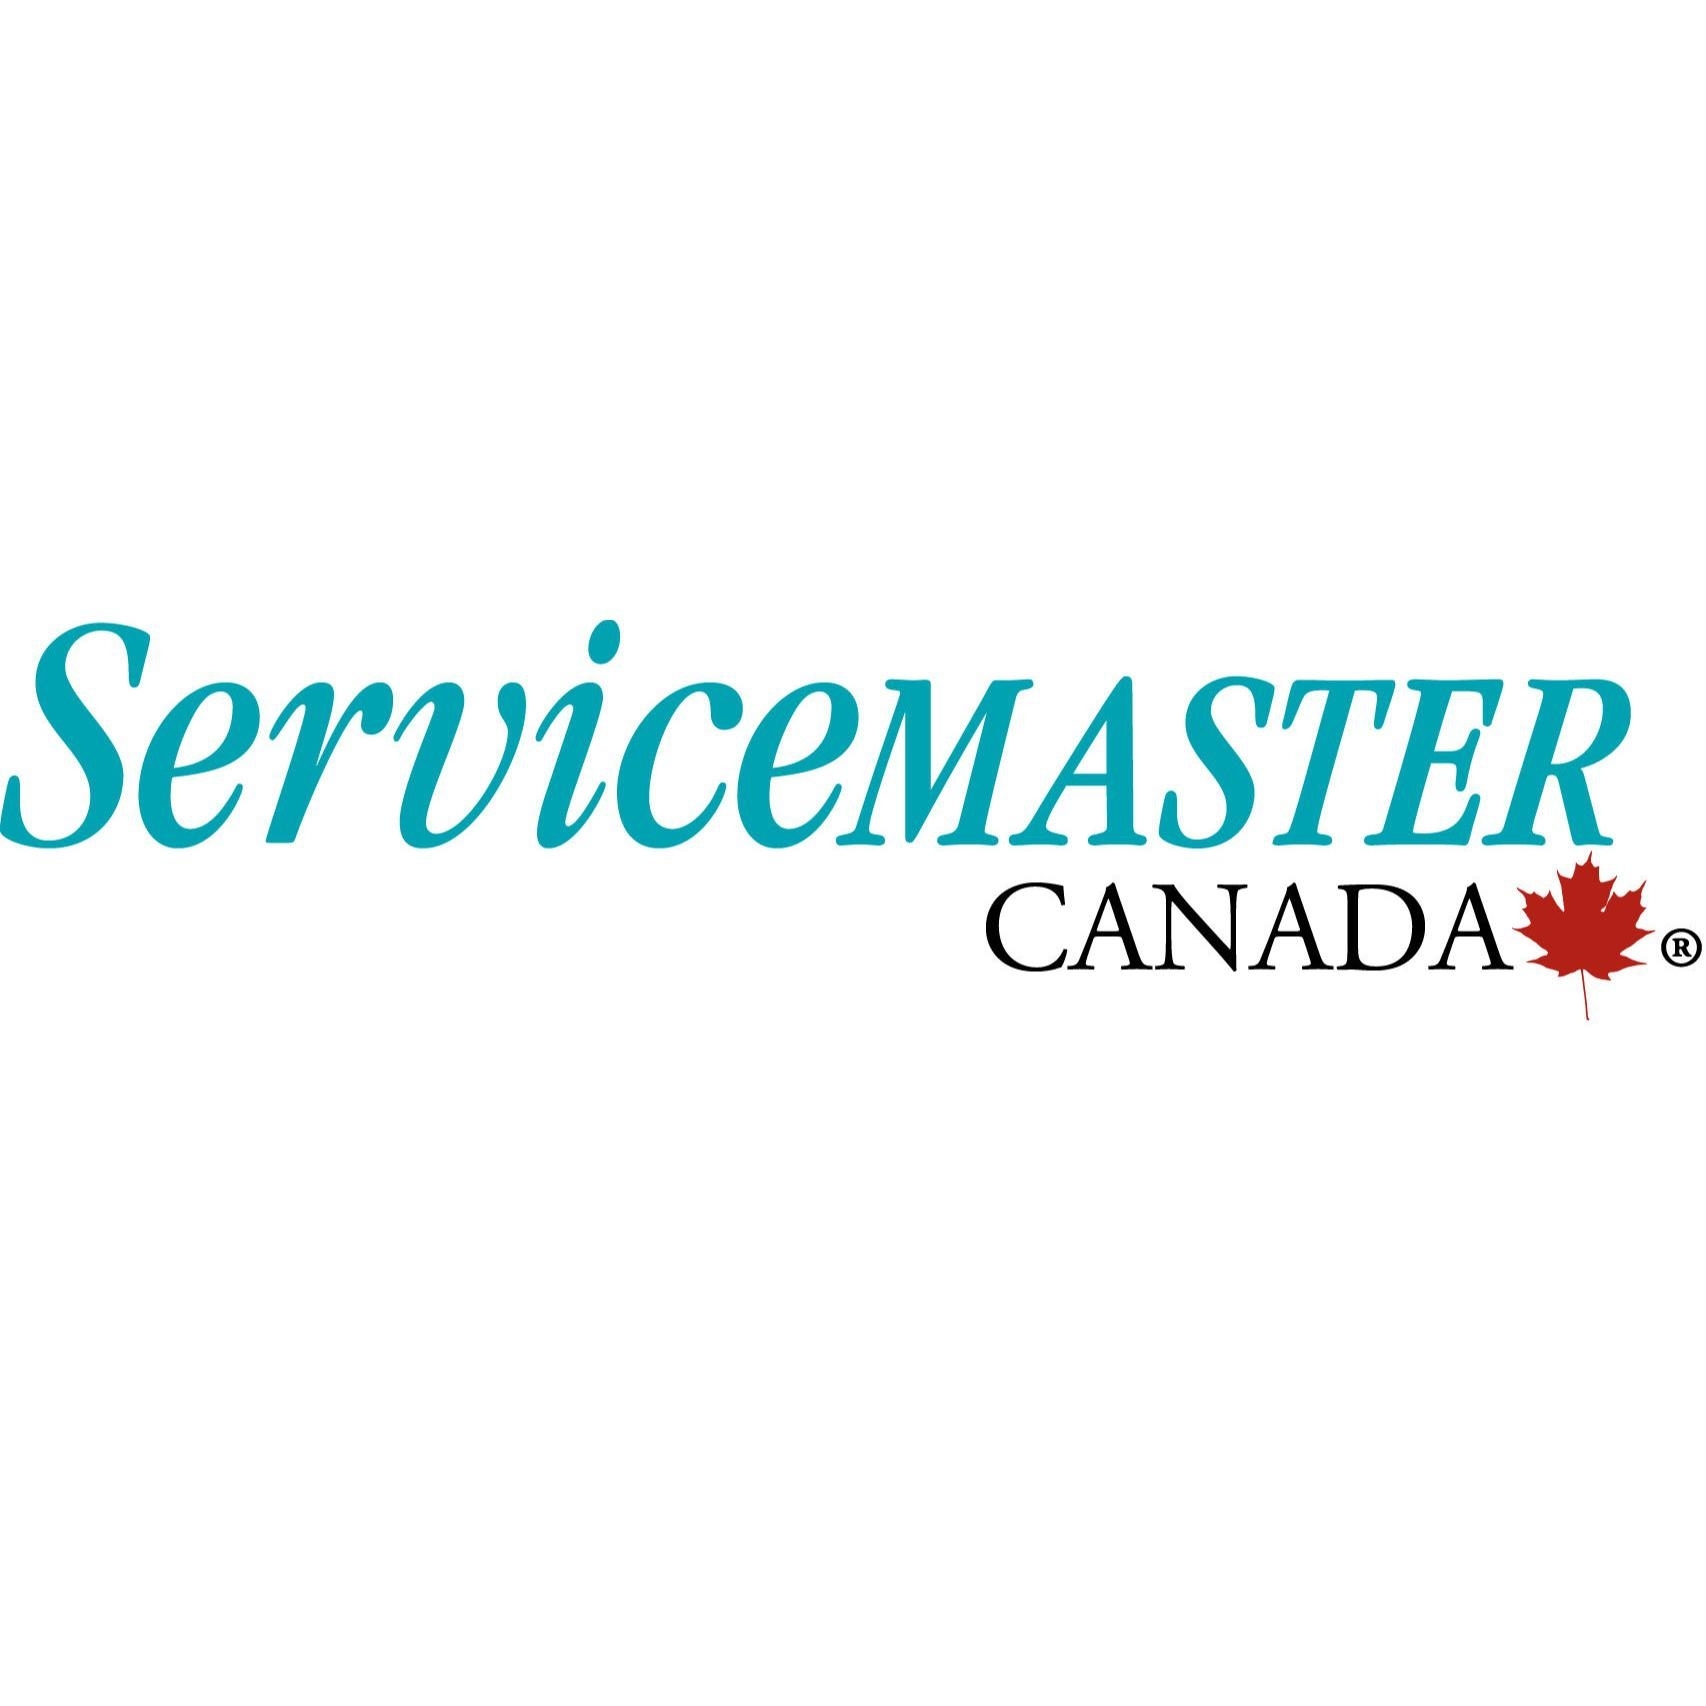 ServiceMaster Canada - Office Buildings